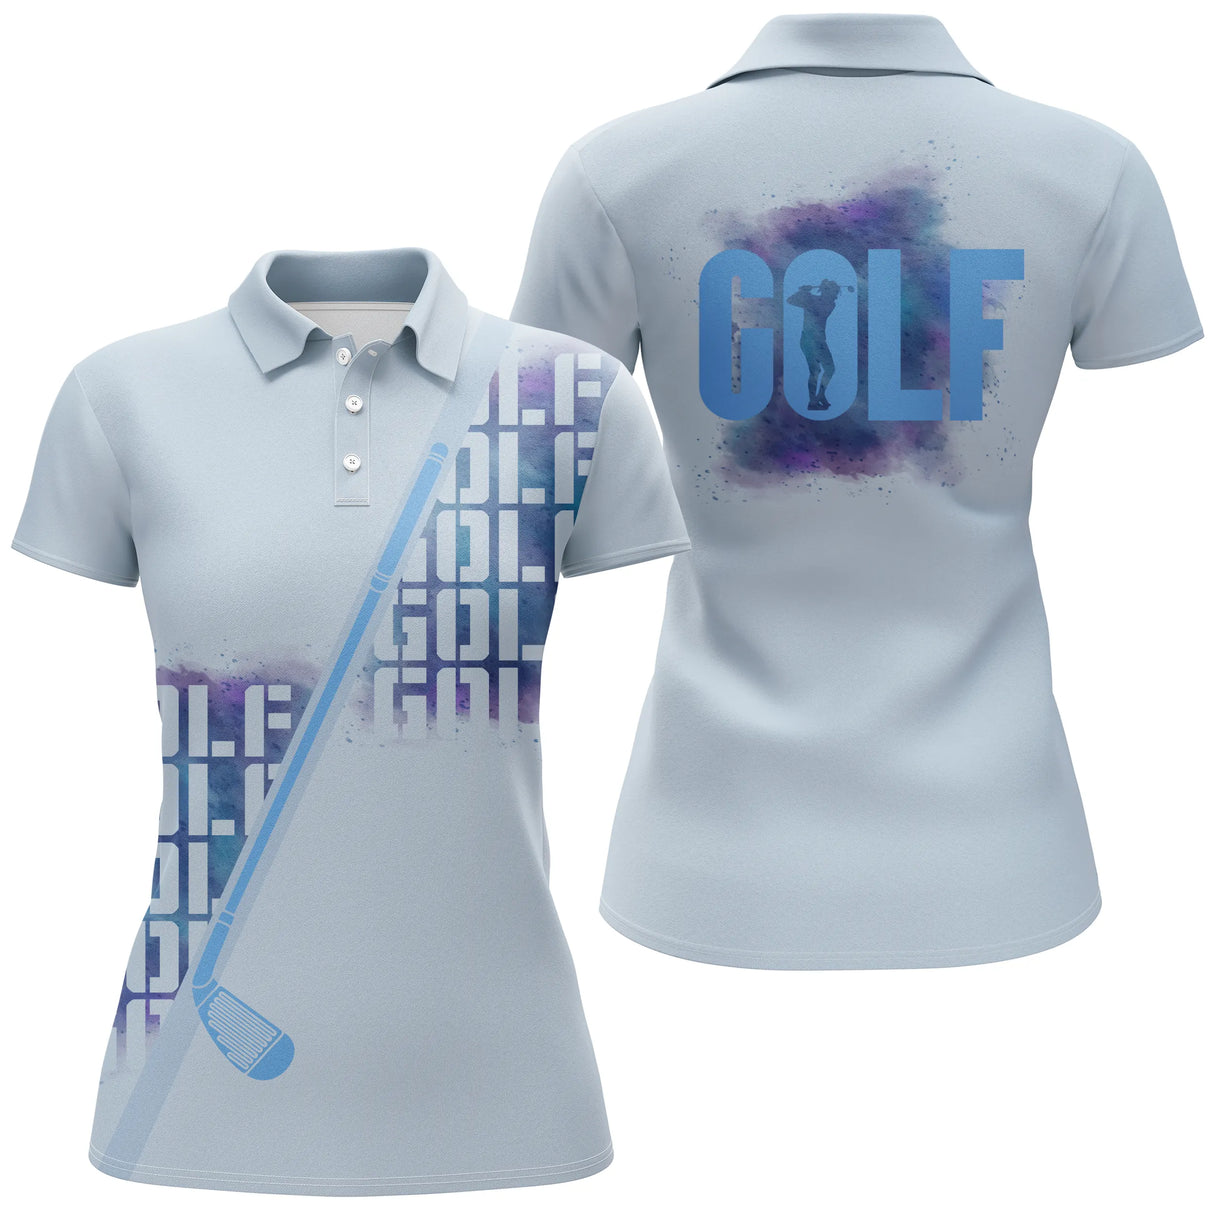 Chiptshirts - Blue Golf Polo Shirt, Original Gift Idea for Golf Fan, Men's Women's Sports Polo Shirt, Golfer, Golfer - CTS25052221